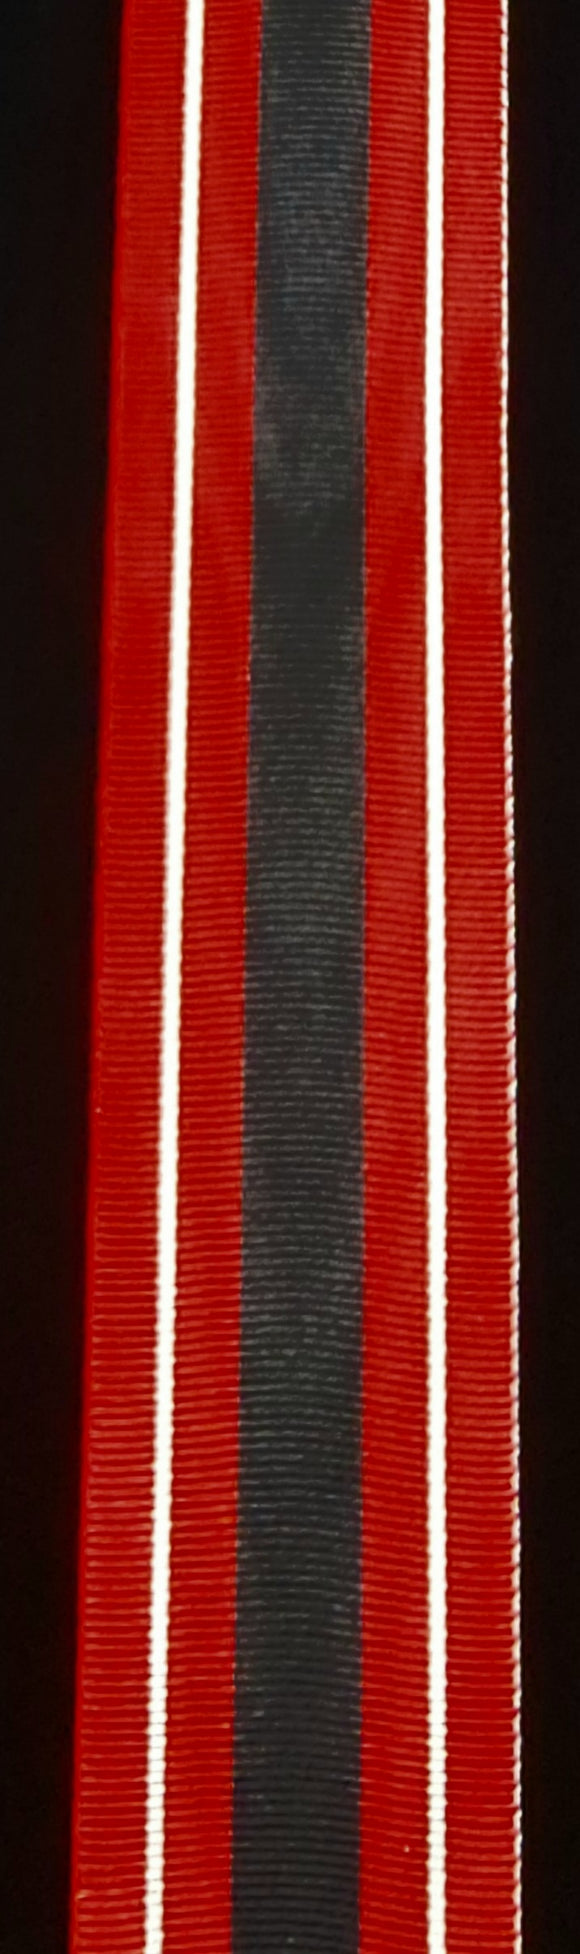 Ribbon, Canadian Sacrifice Medal